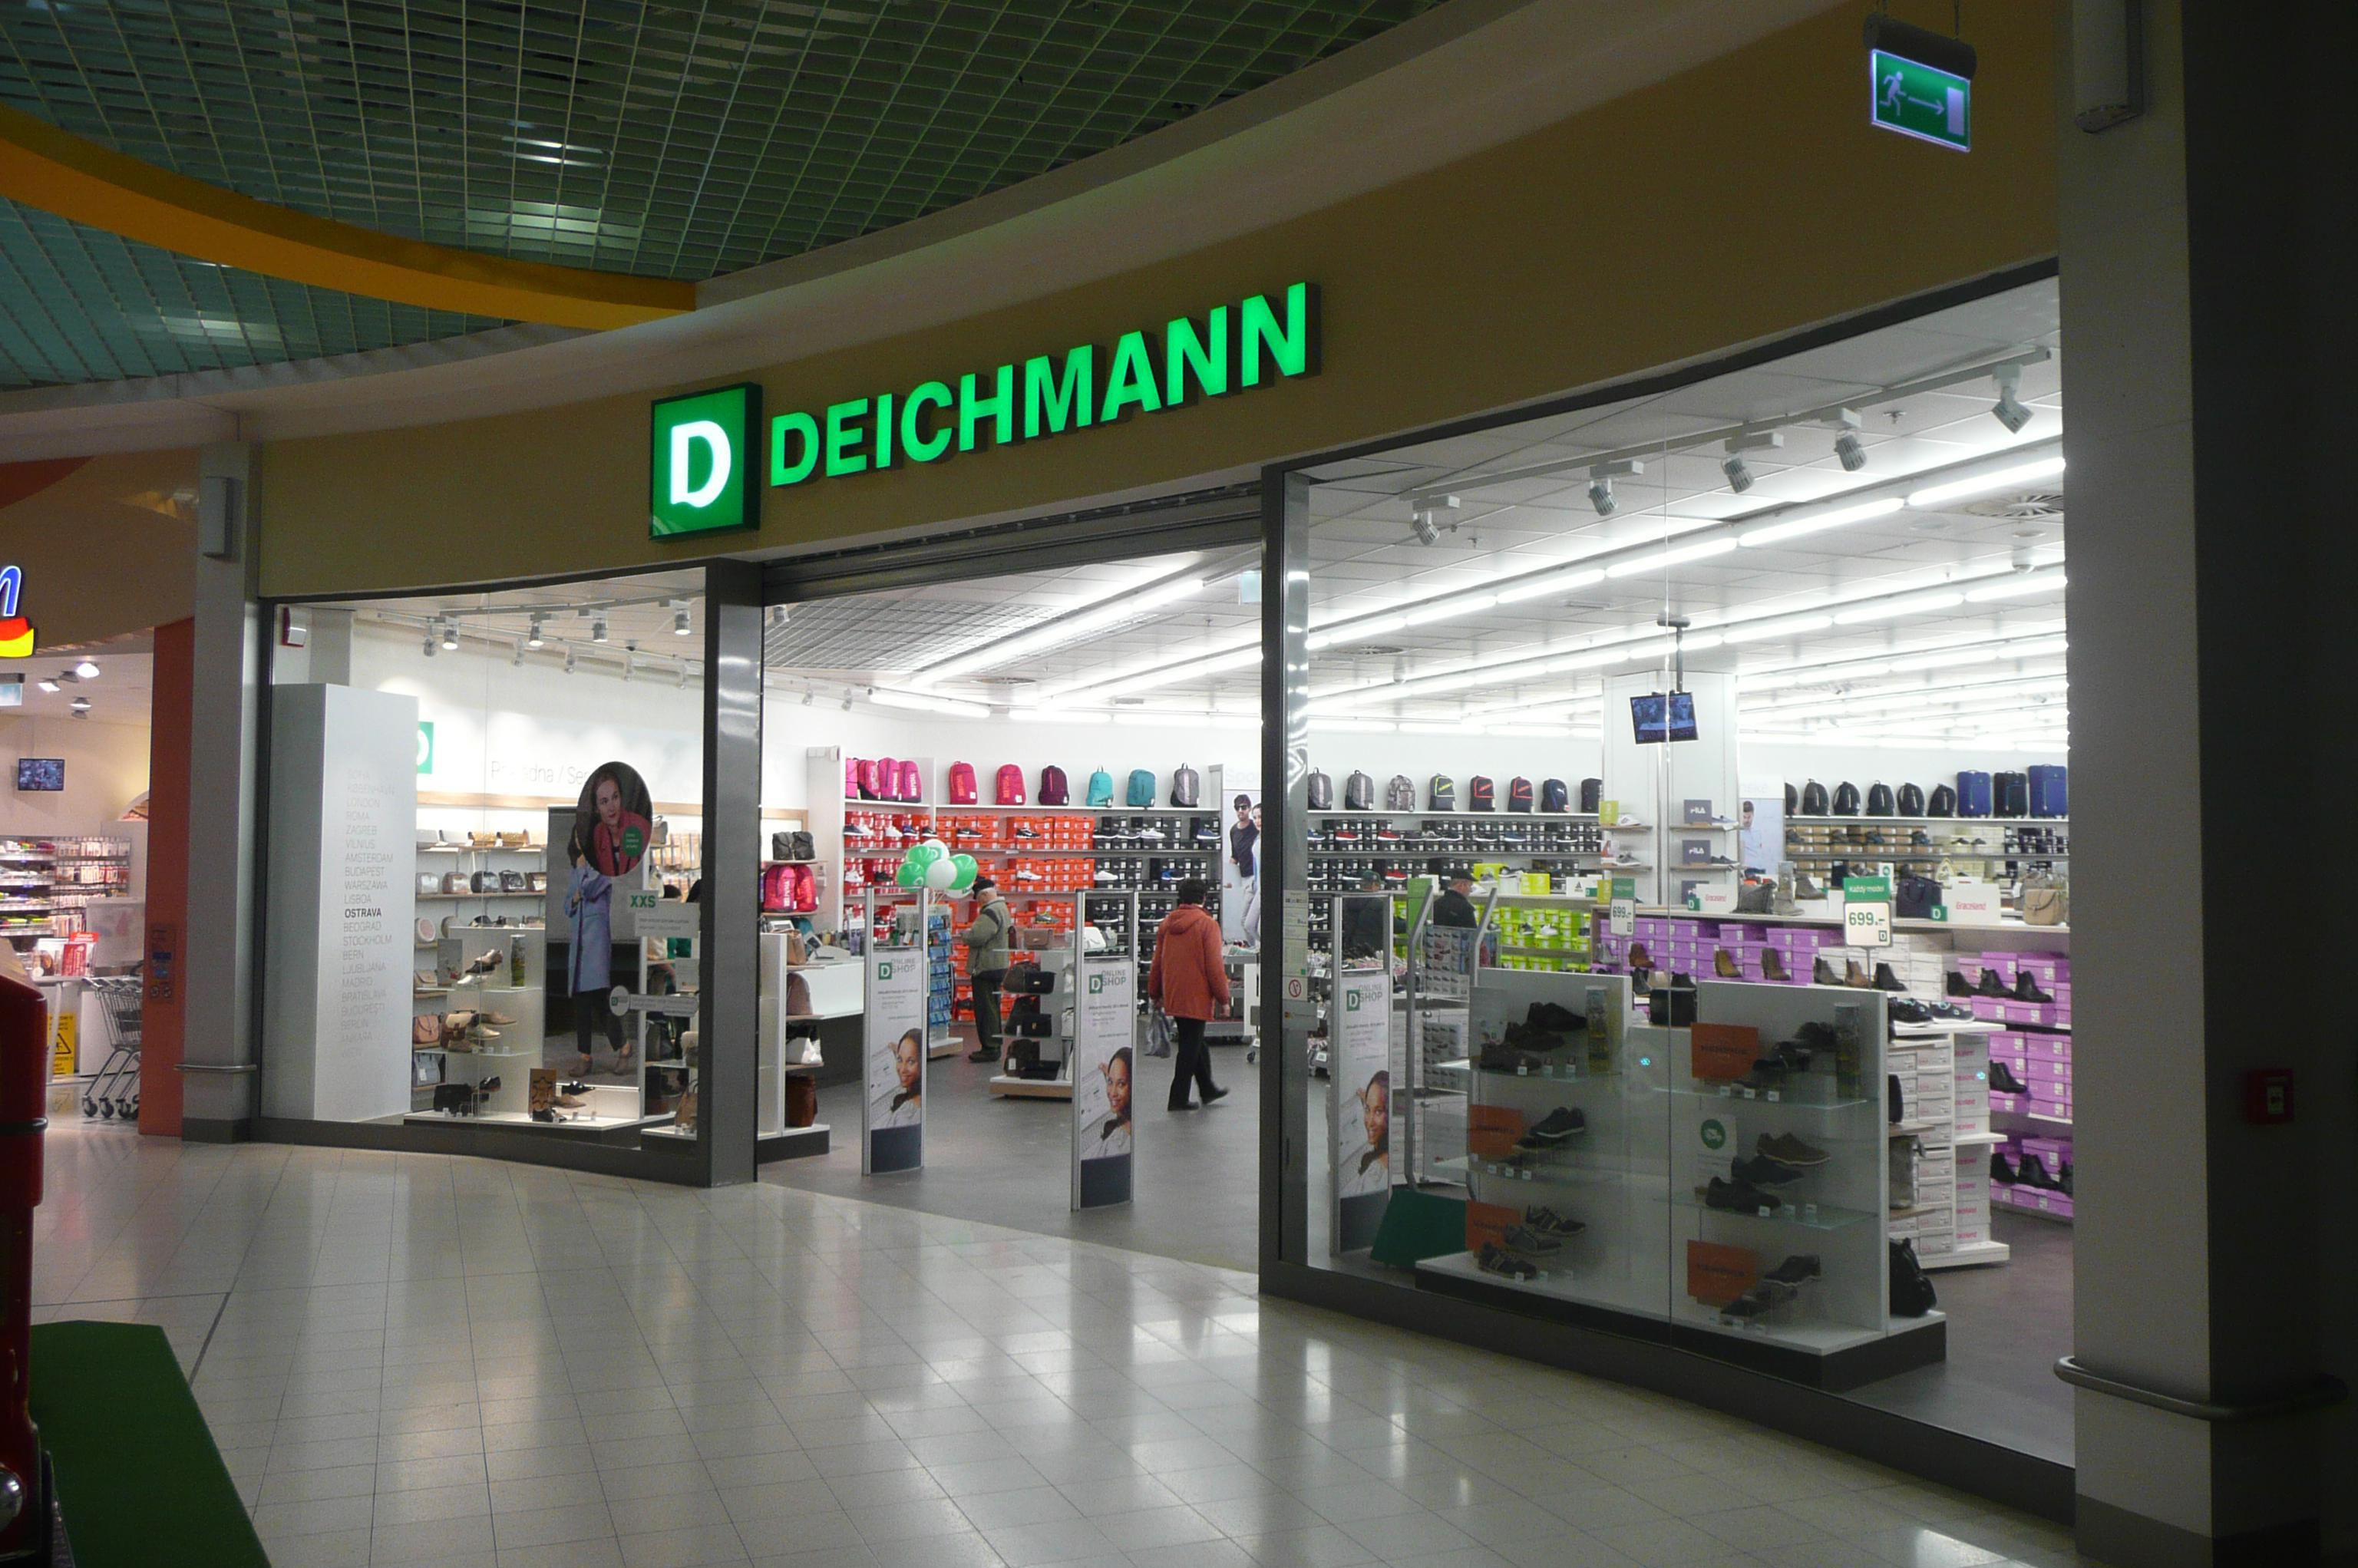 DEICHMANN (Shoe shop) - in English language